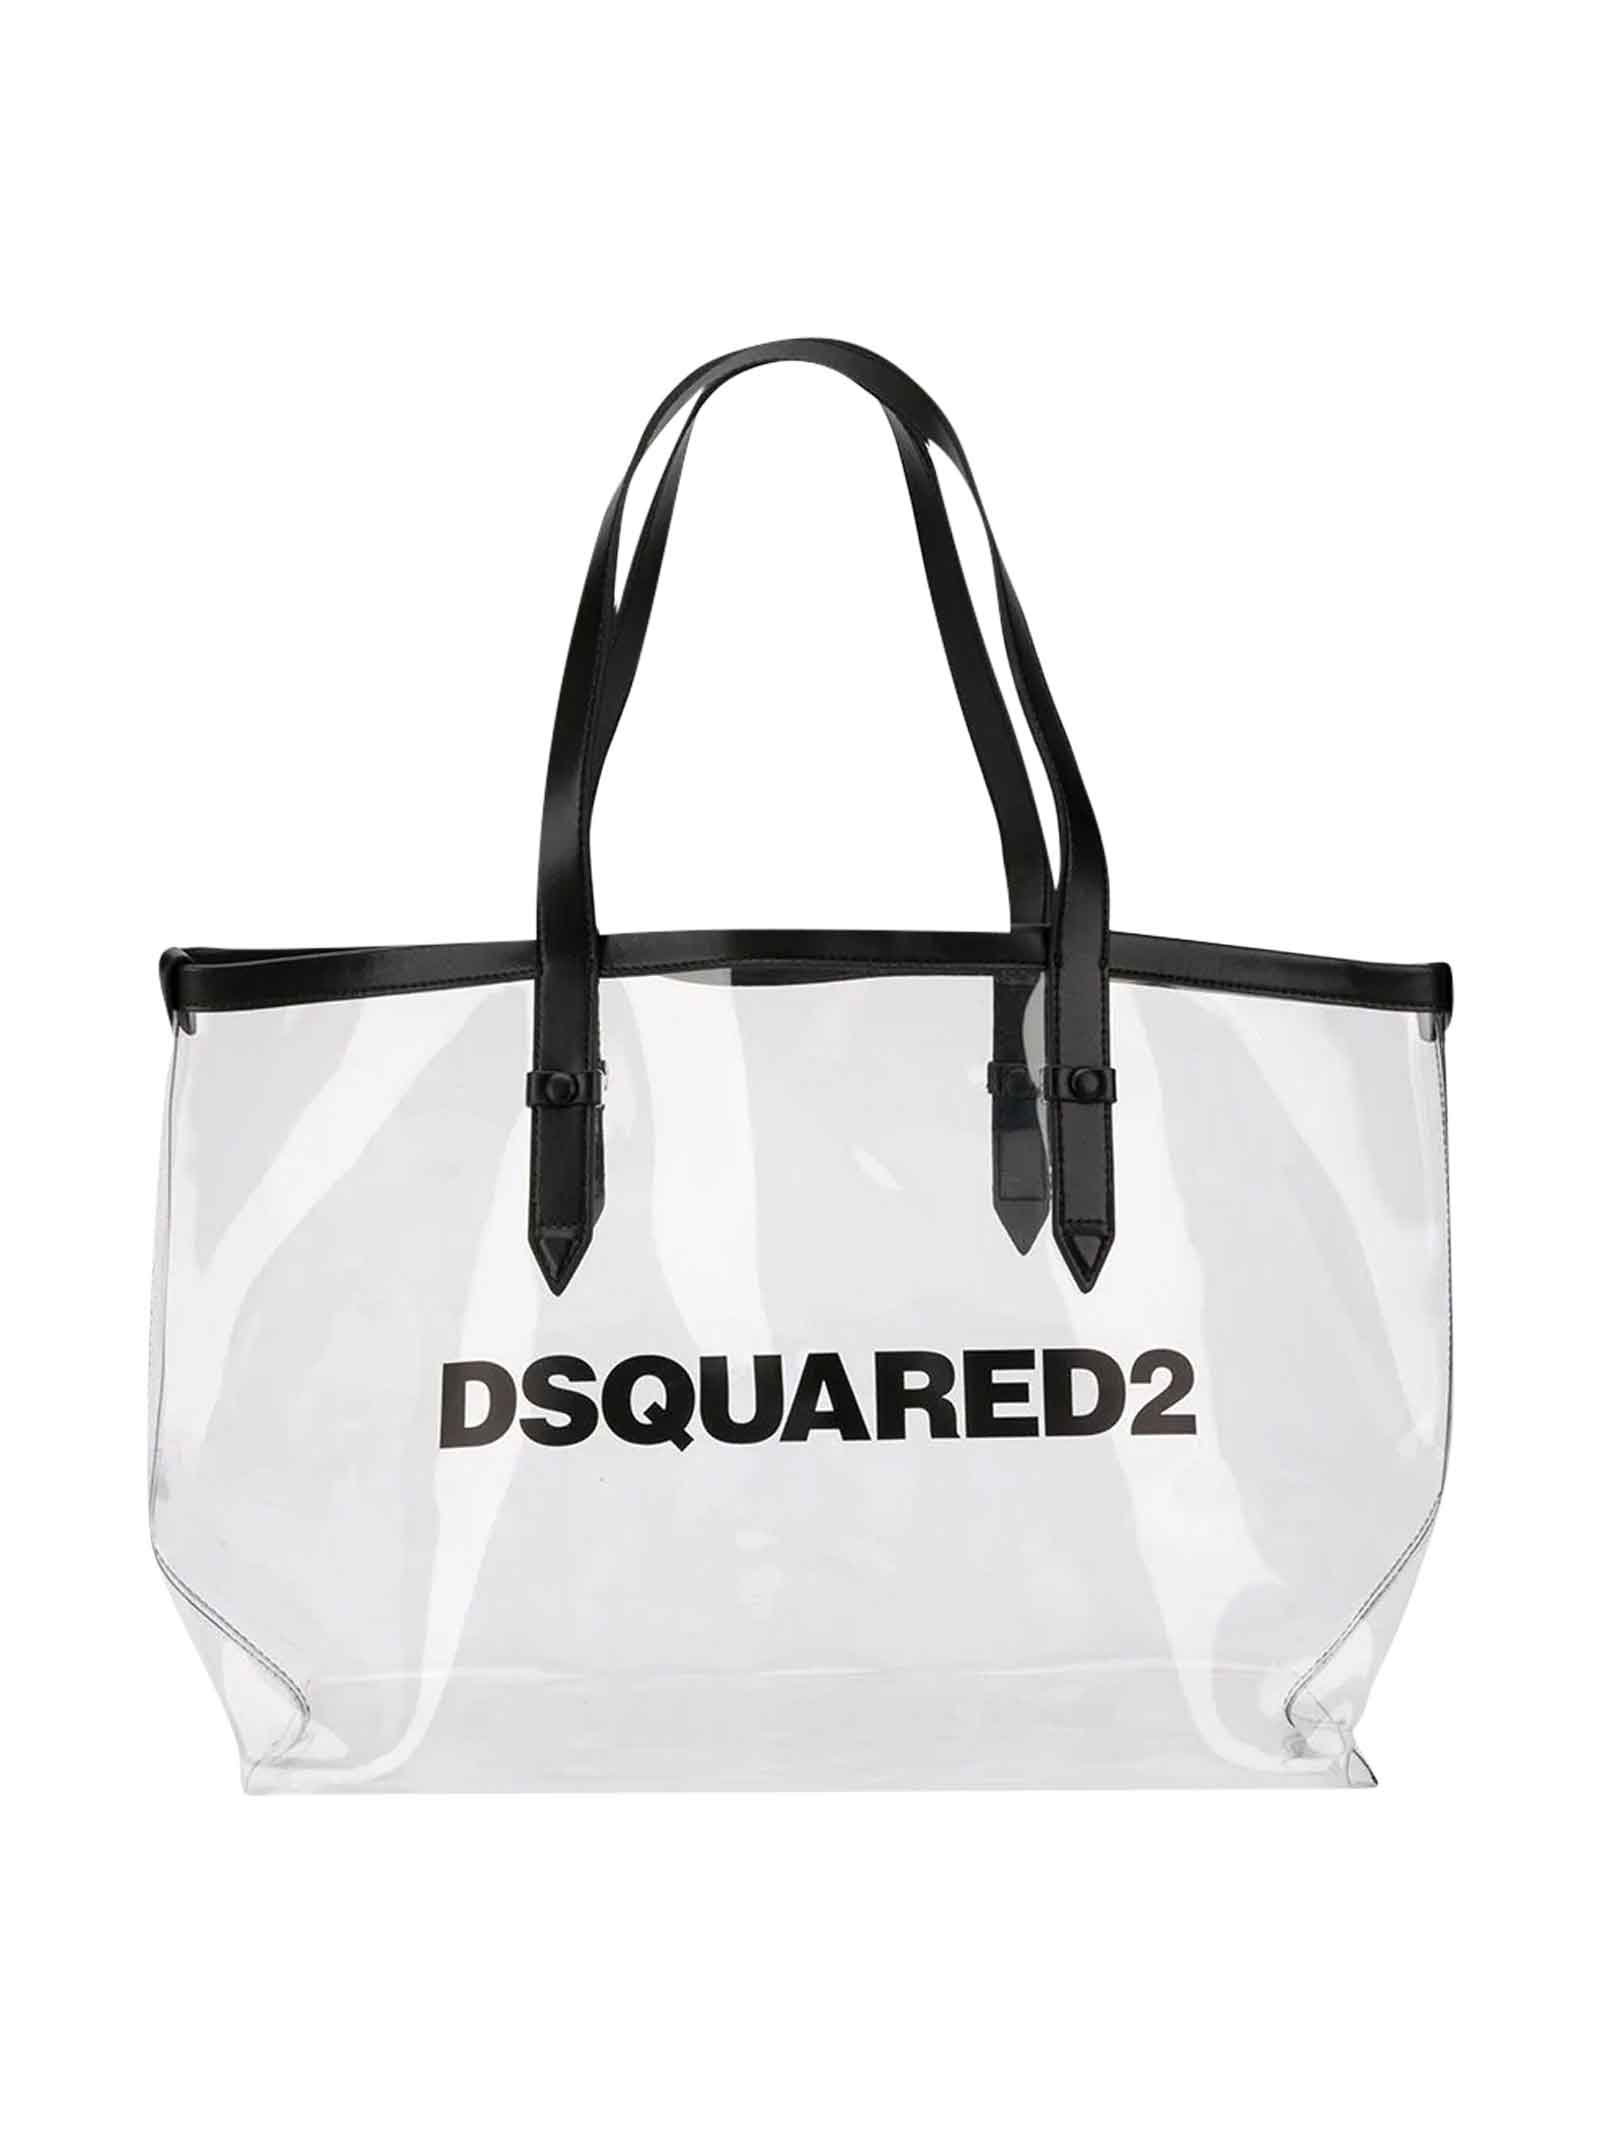 Dsquared2 White And Black Tote Bag